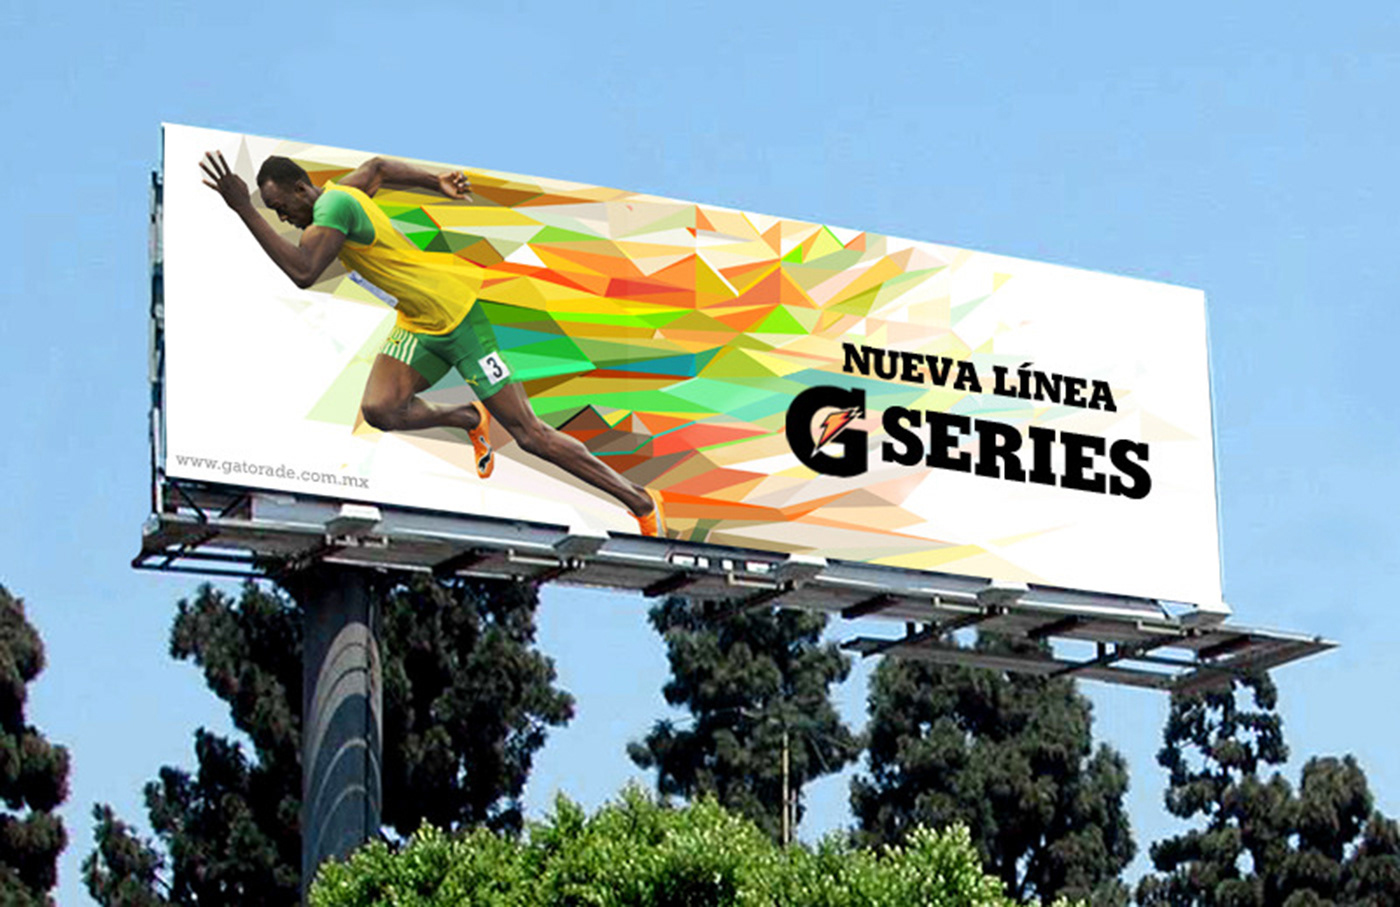 Charis Tsevis - Gatorade Evoluciona & New Line 3 Series